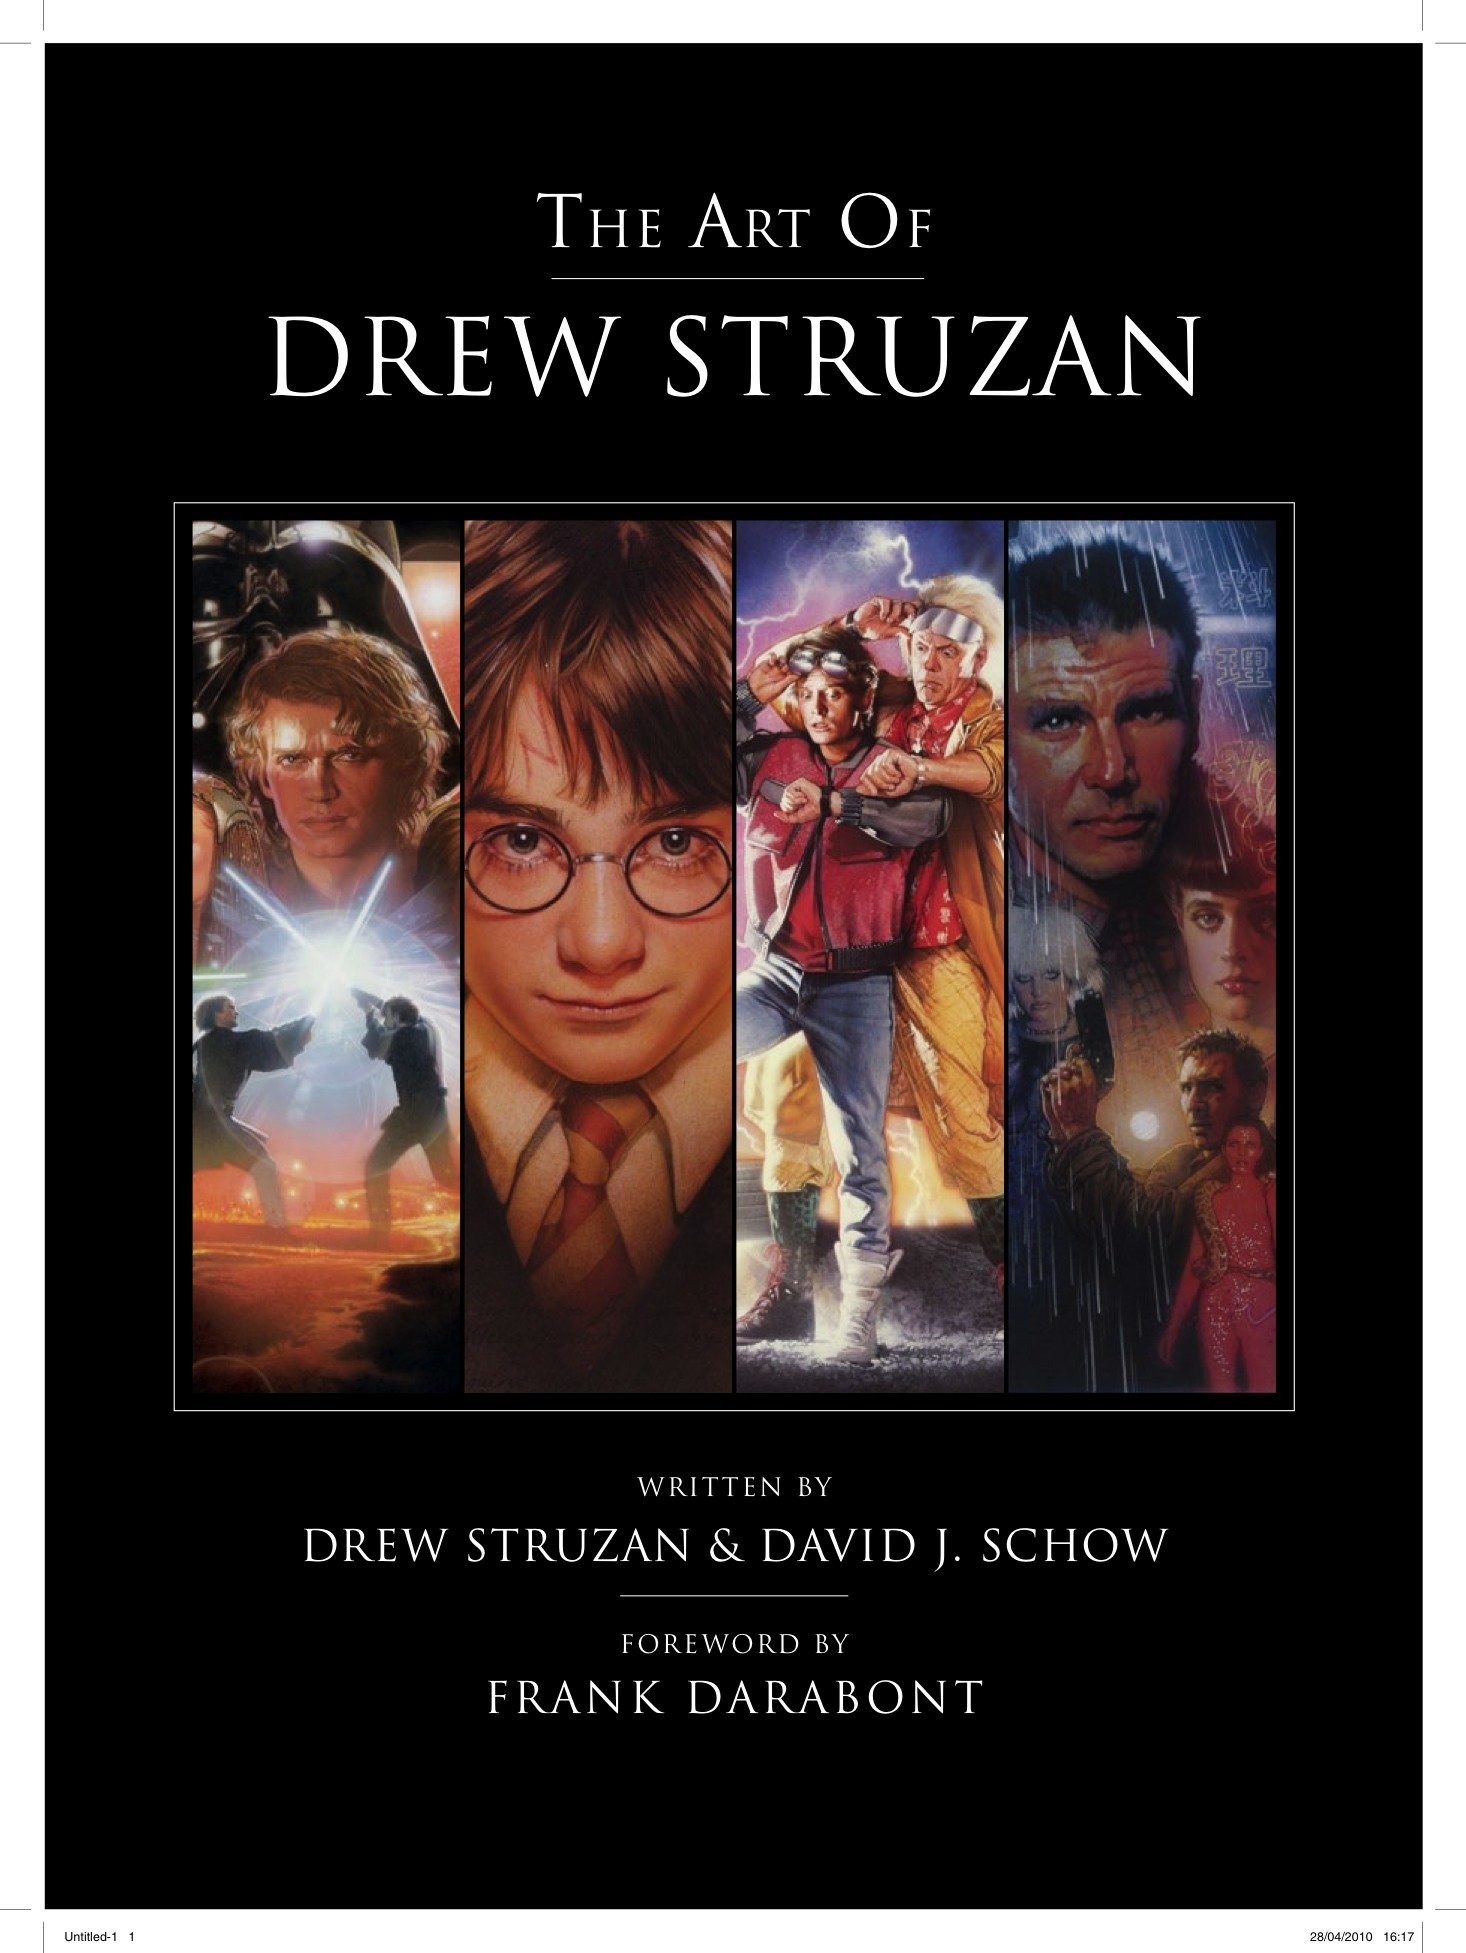 Art of Drew Struzan Hardcover